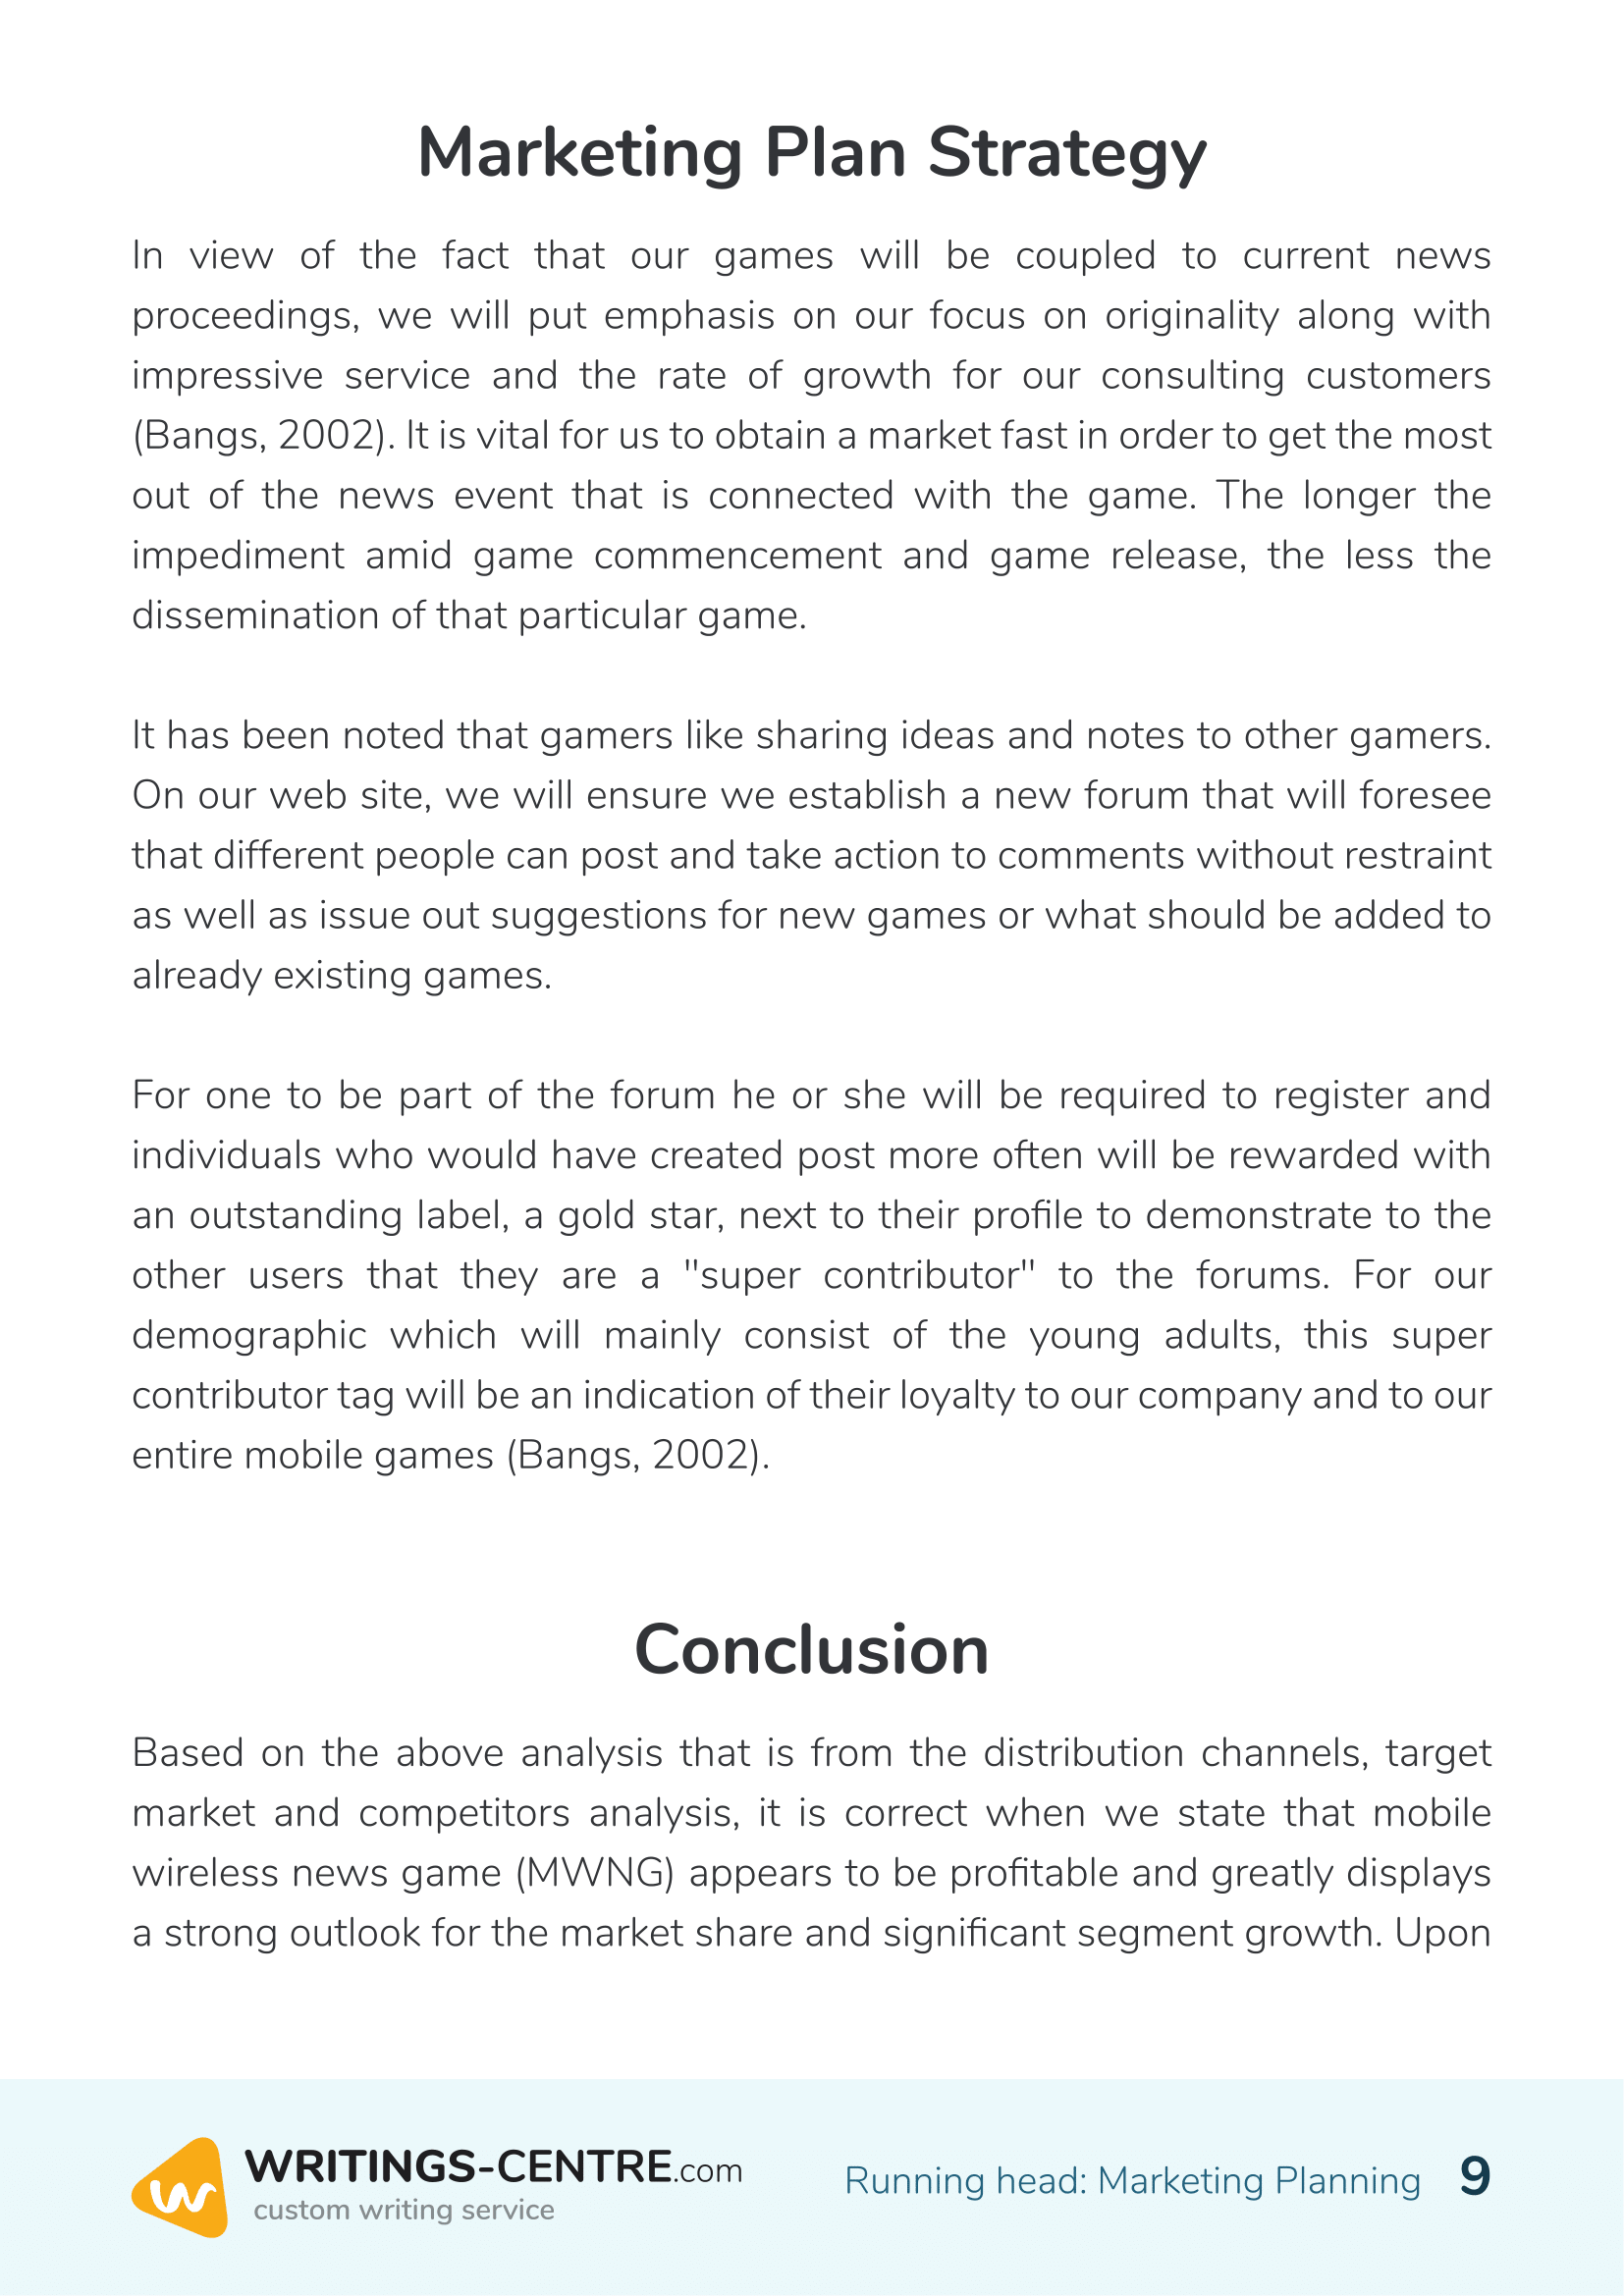 conclusion on marketing plan essay